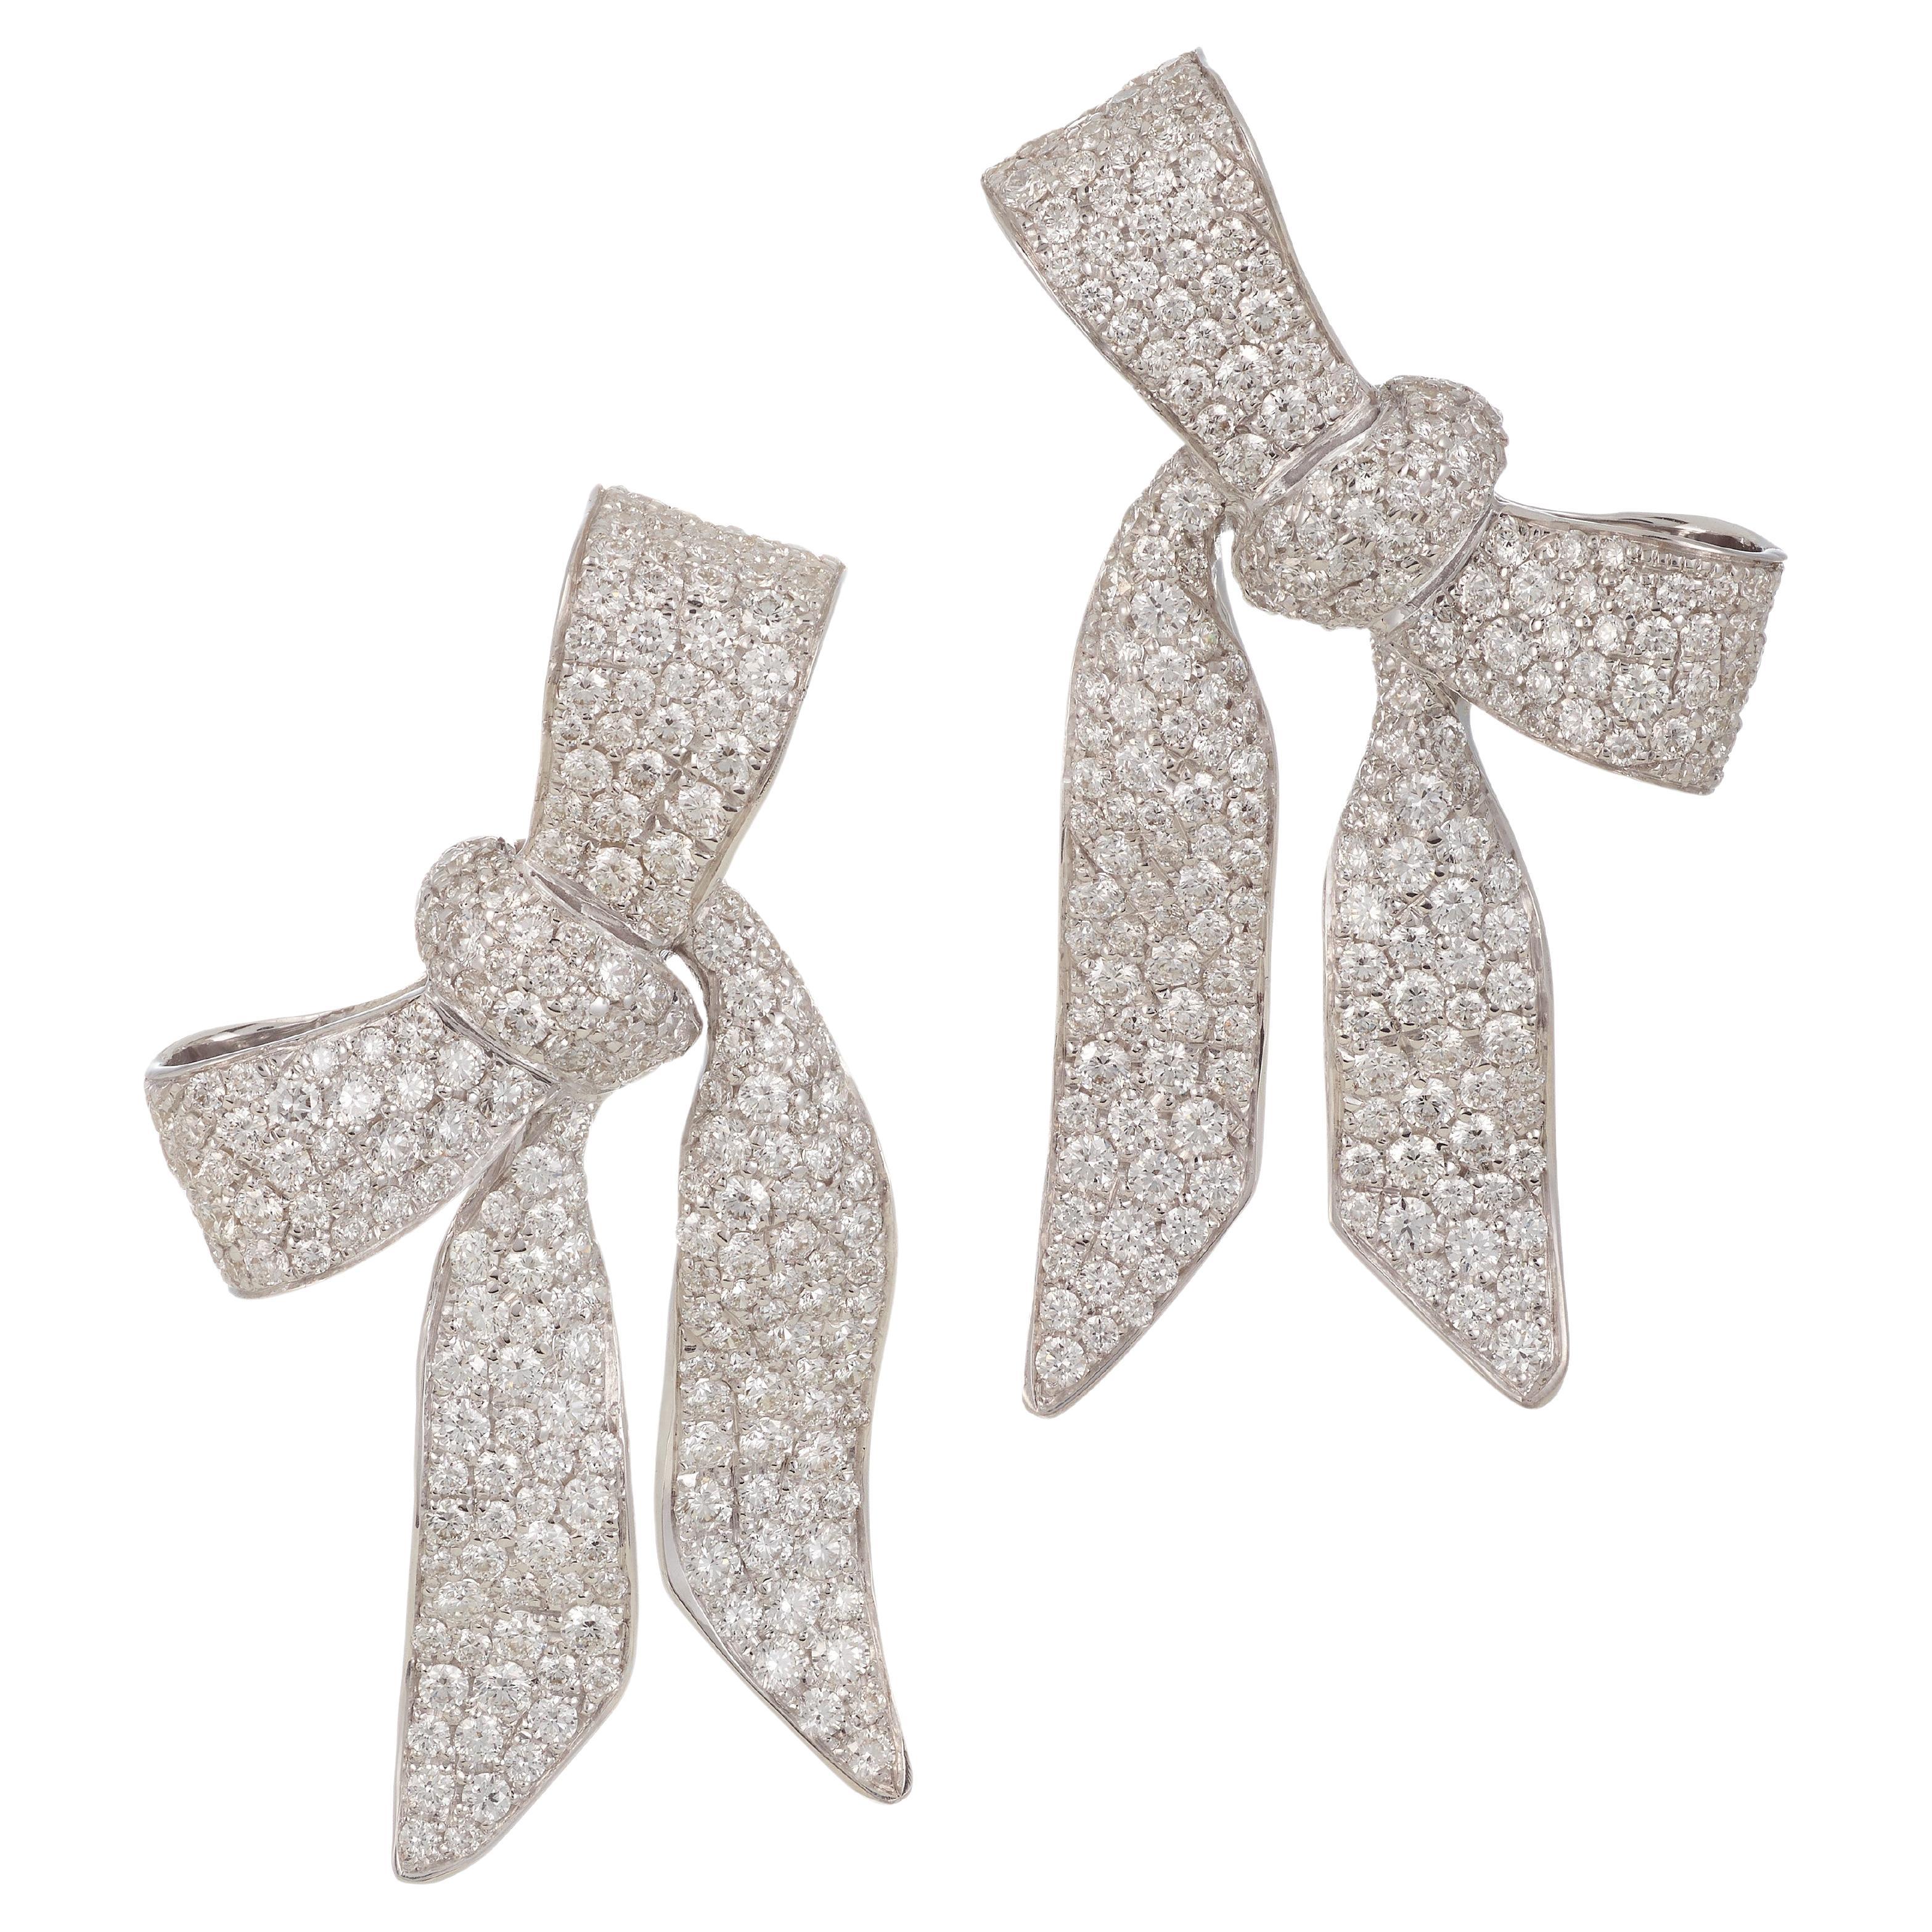 Rosior Diamond "Bow" Drop Earrings set in White Gold